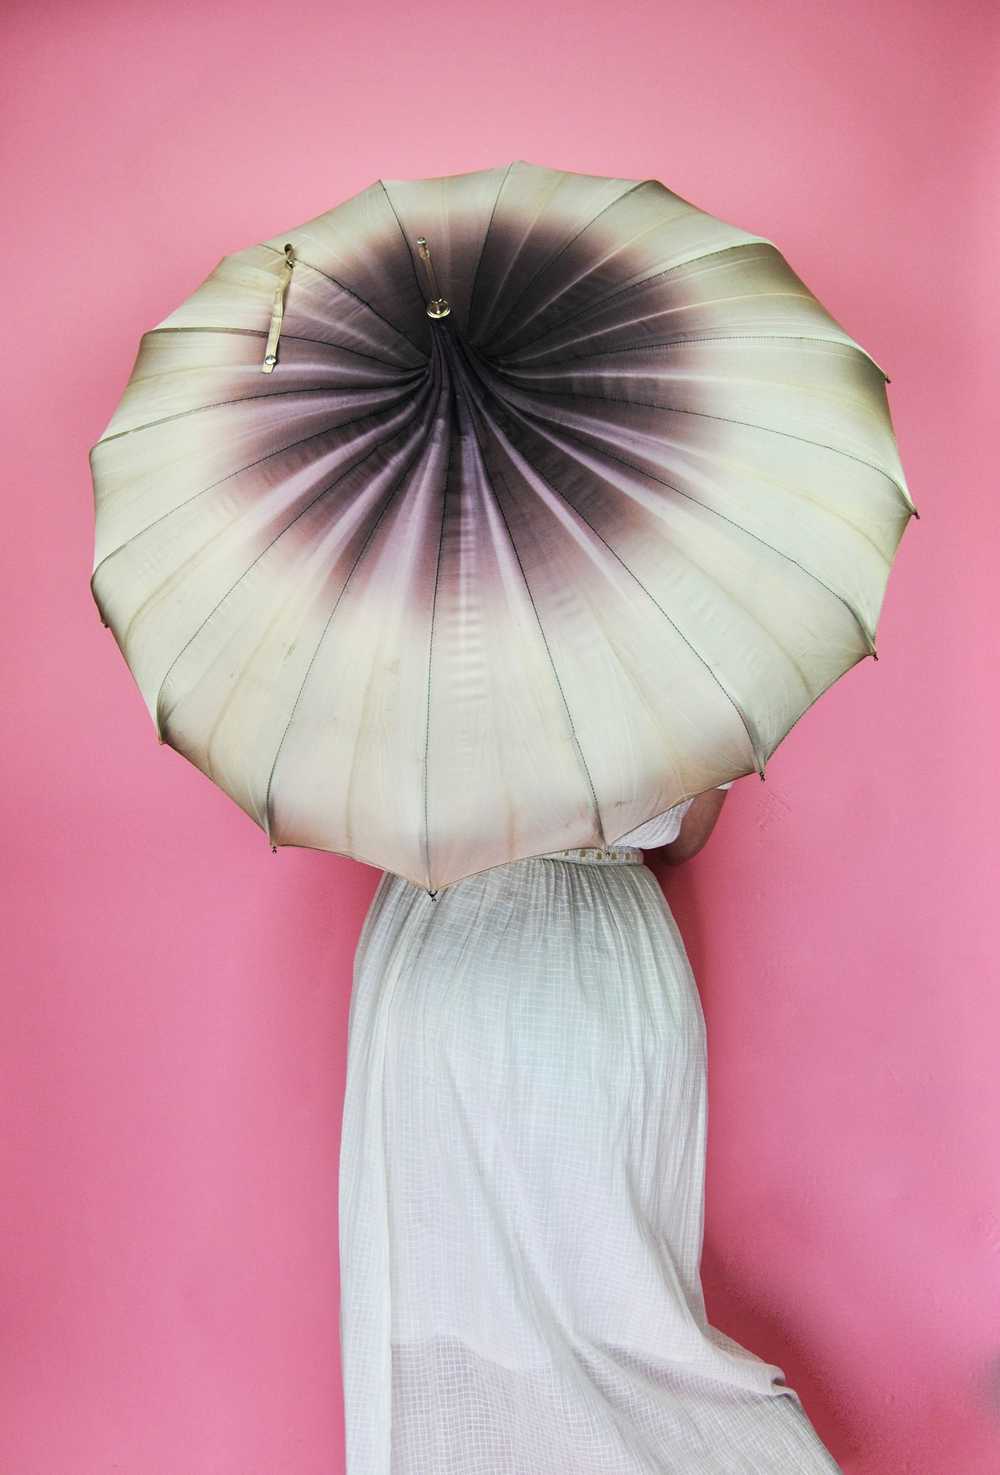 Vintage Cream and Purple Parasol Umbrella - image 2